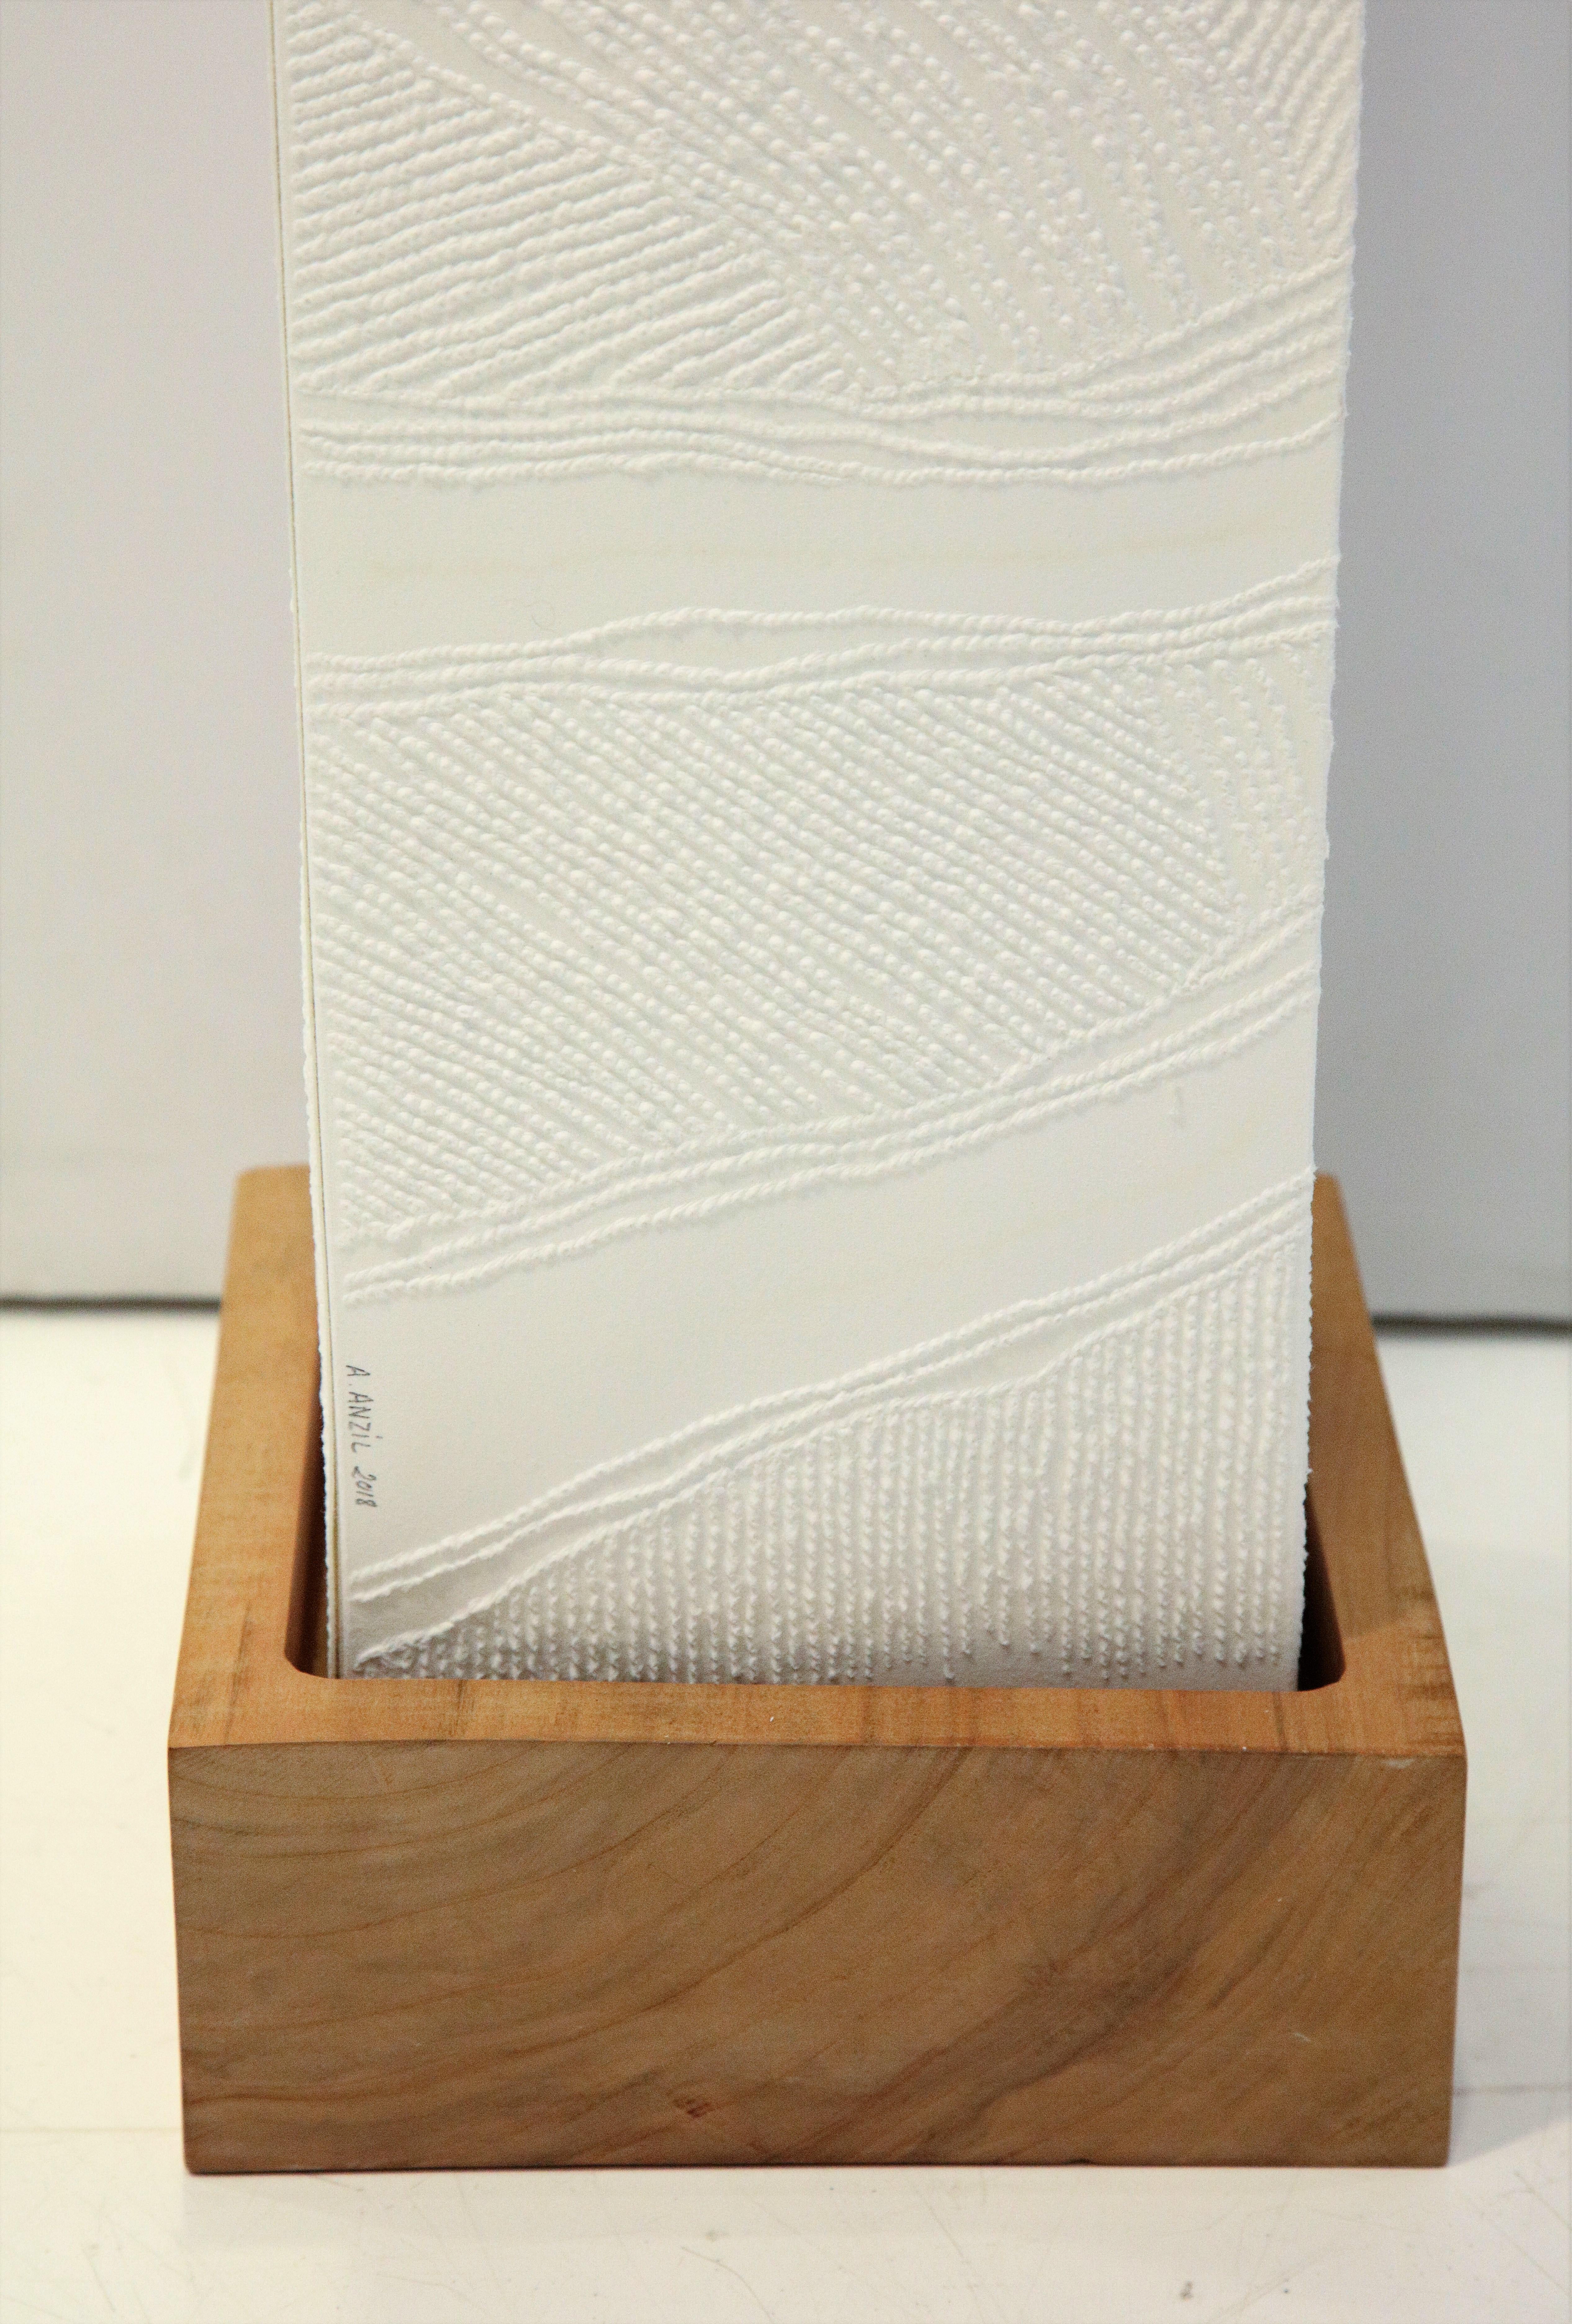 Lit Paper Sculpture by Antonin Anzil, France, 2018 1